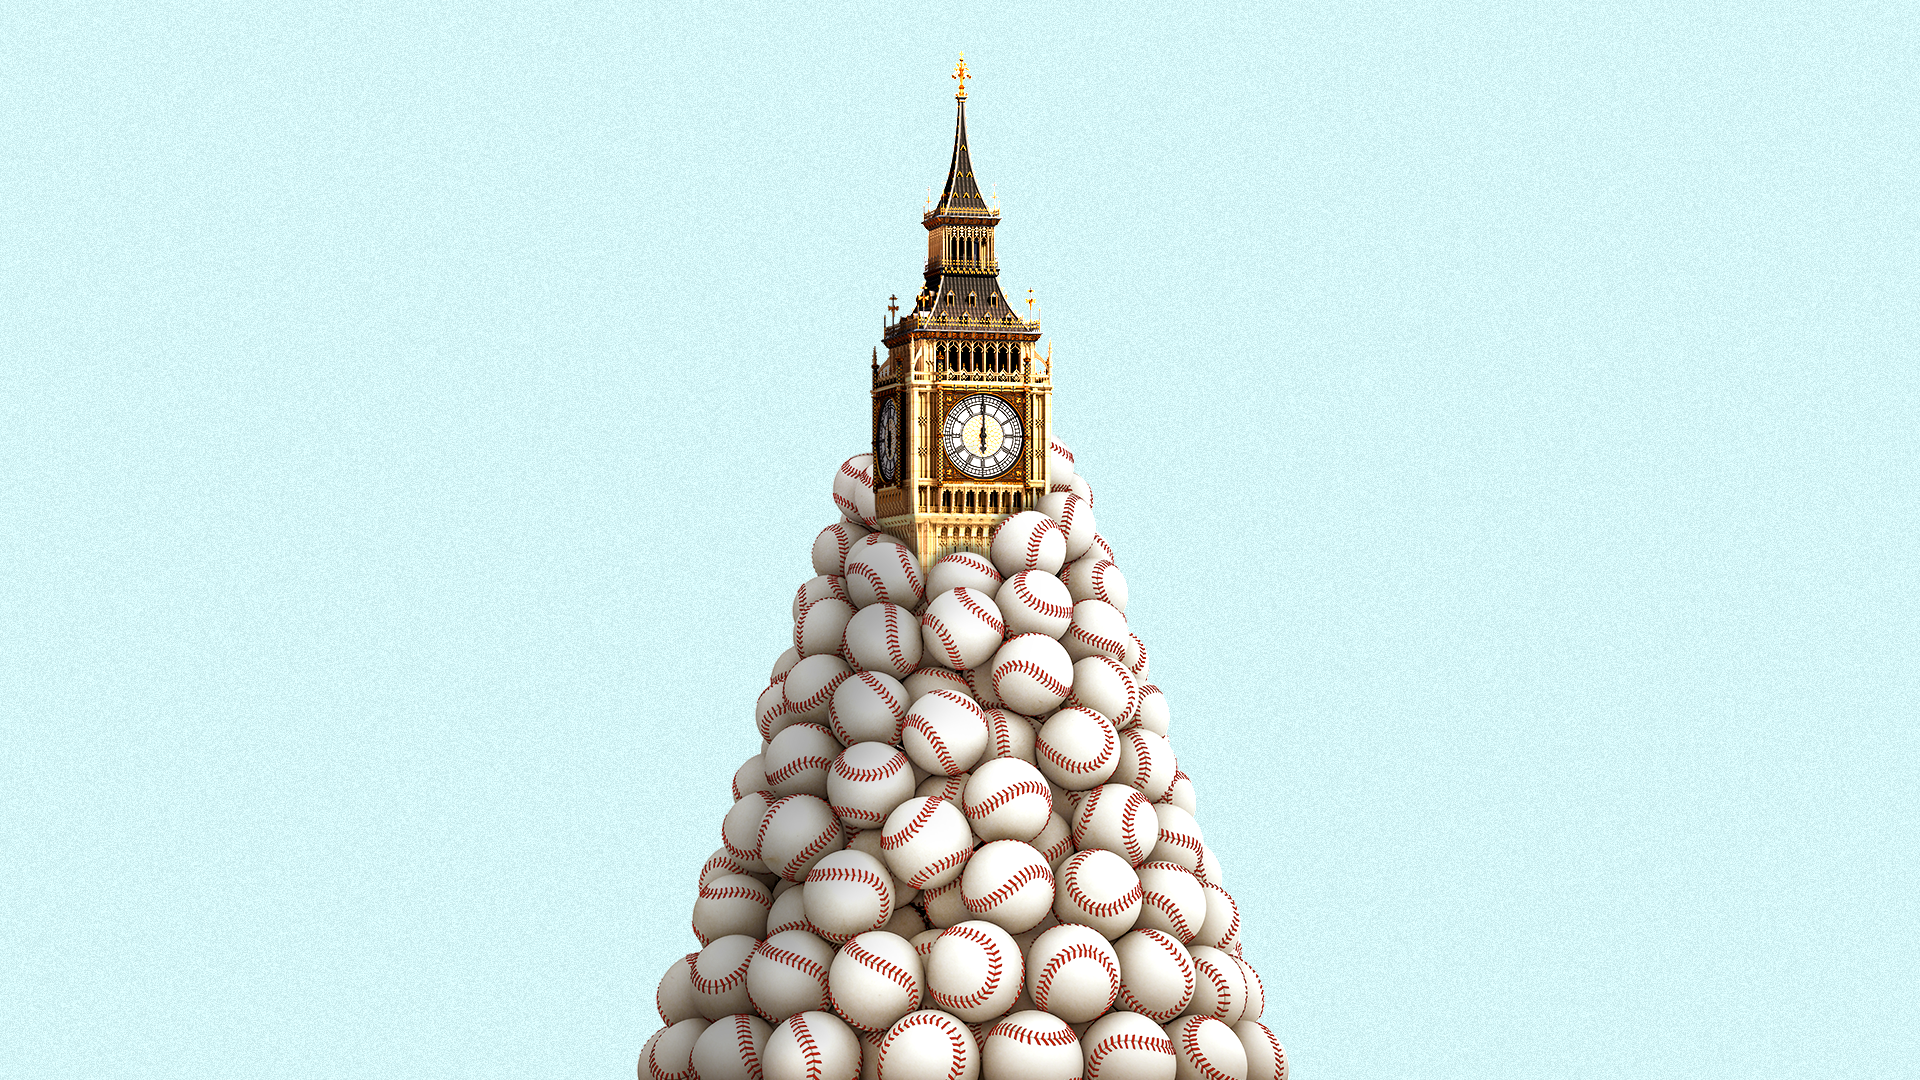 Big Ben engulfed by a mountain of baseballs